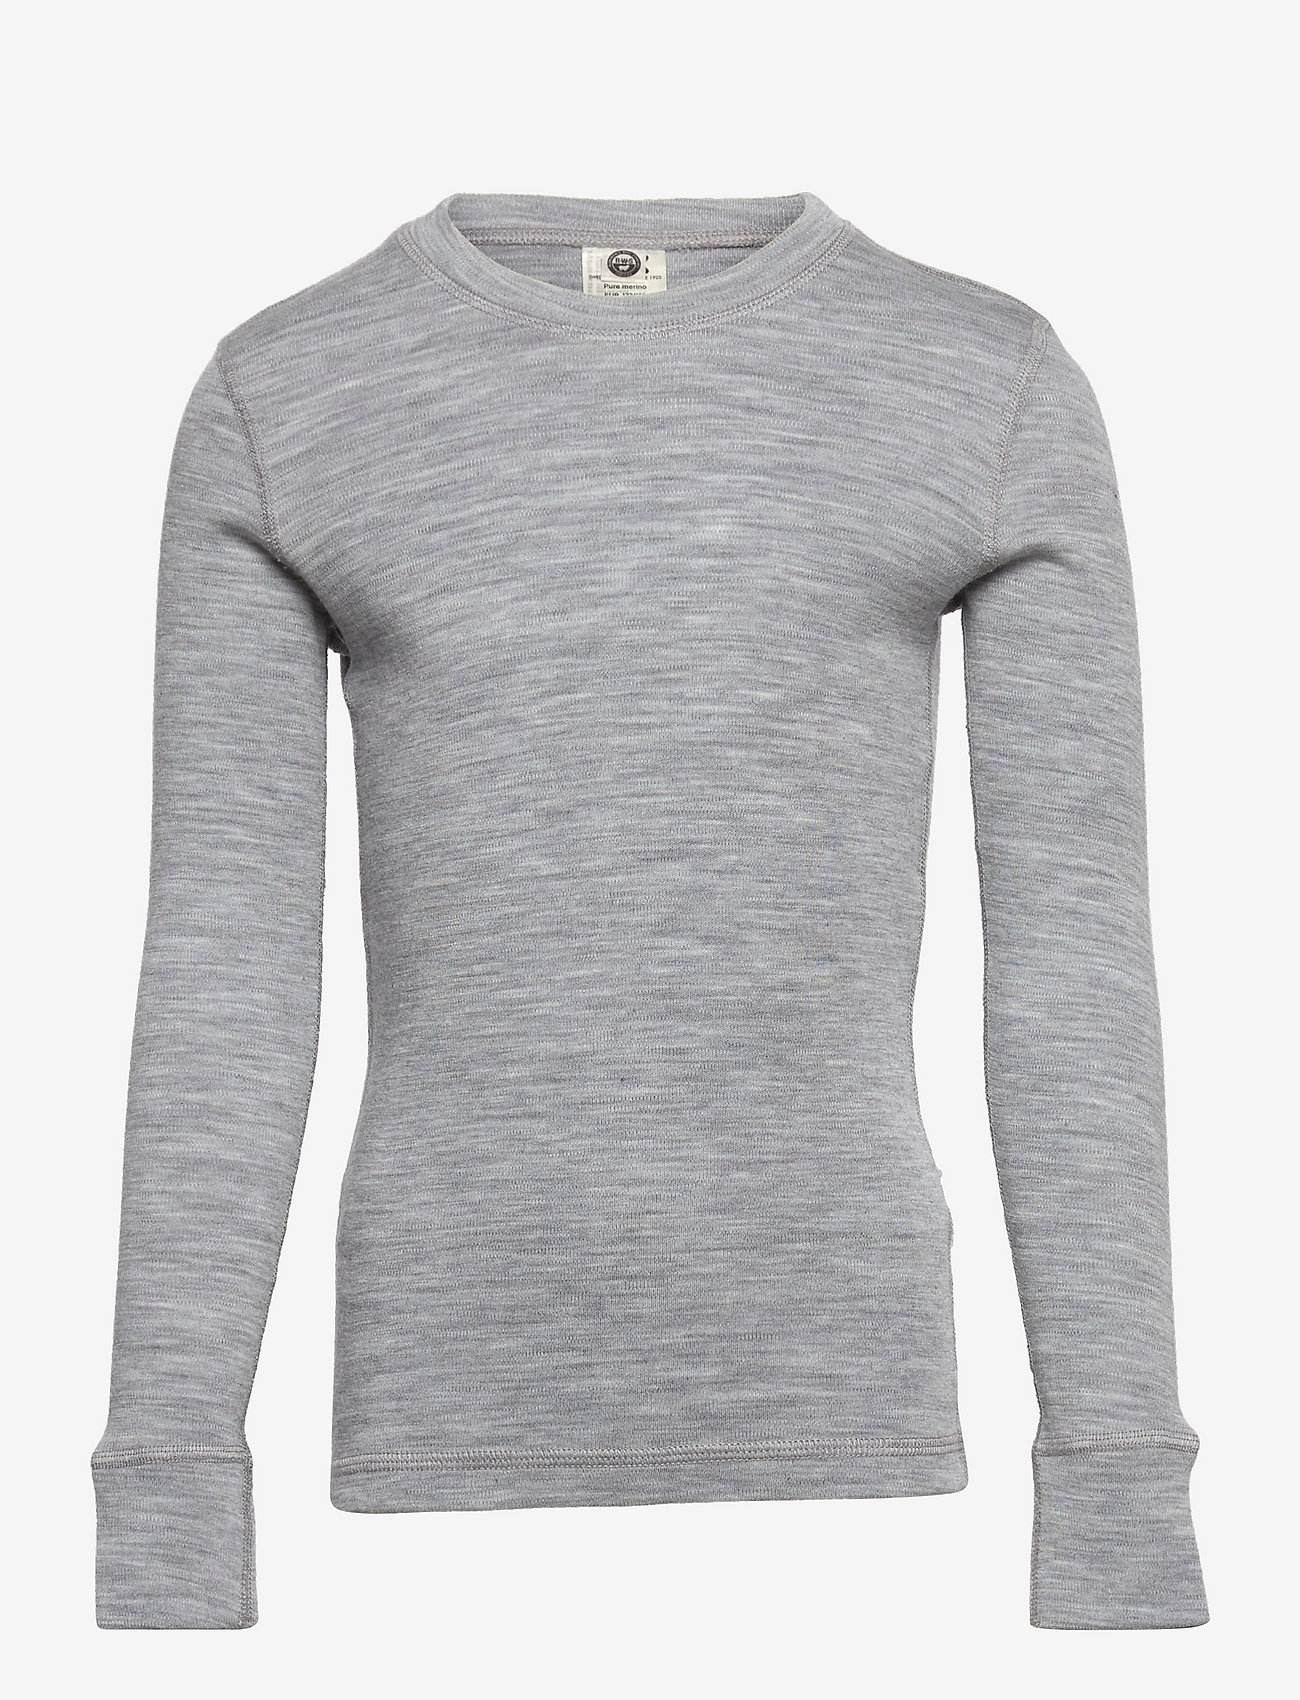 Lindex - Top merino wool solid - grey - 1